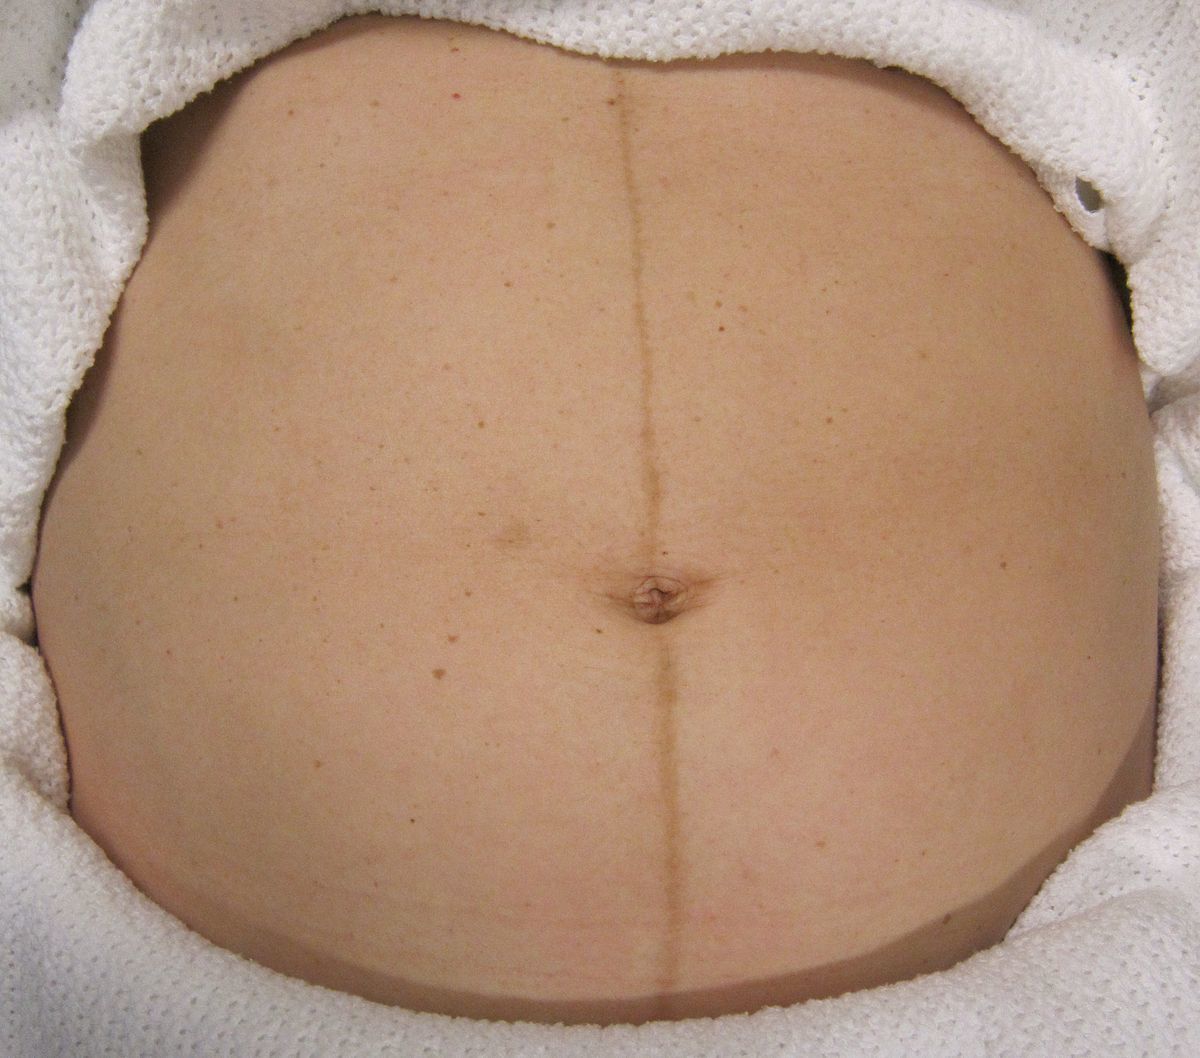 1. Muncul linea nigra atau garis hitam perut